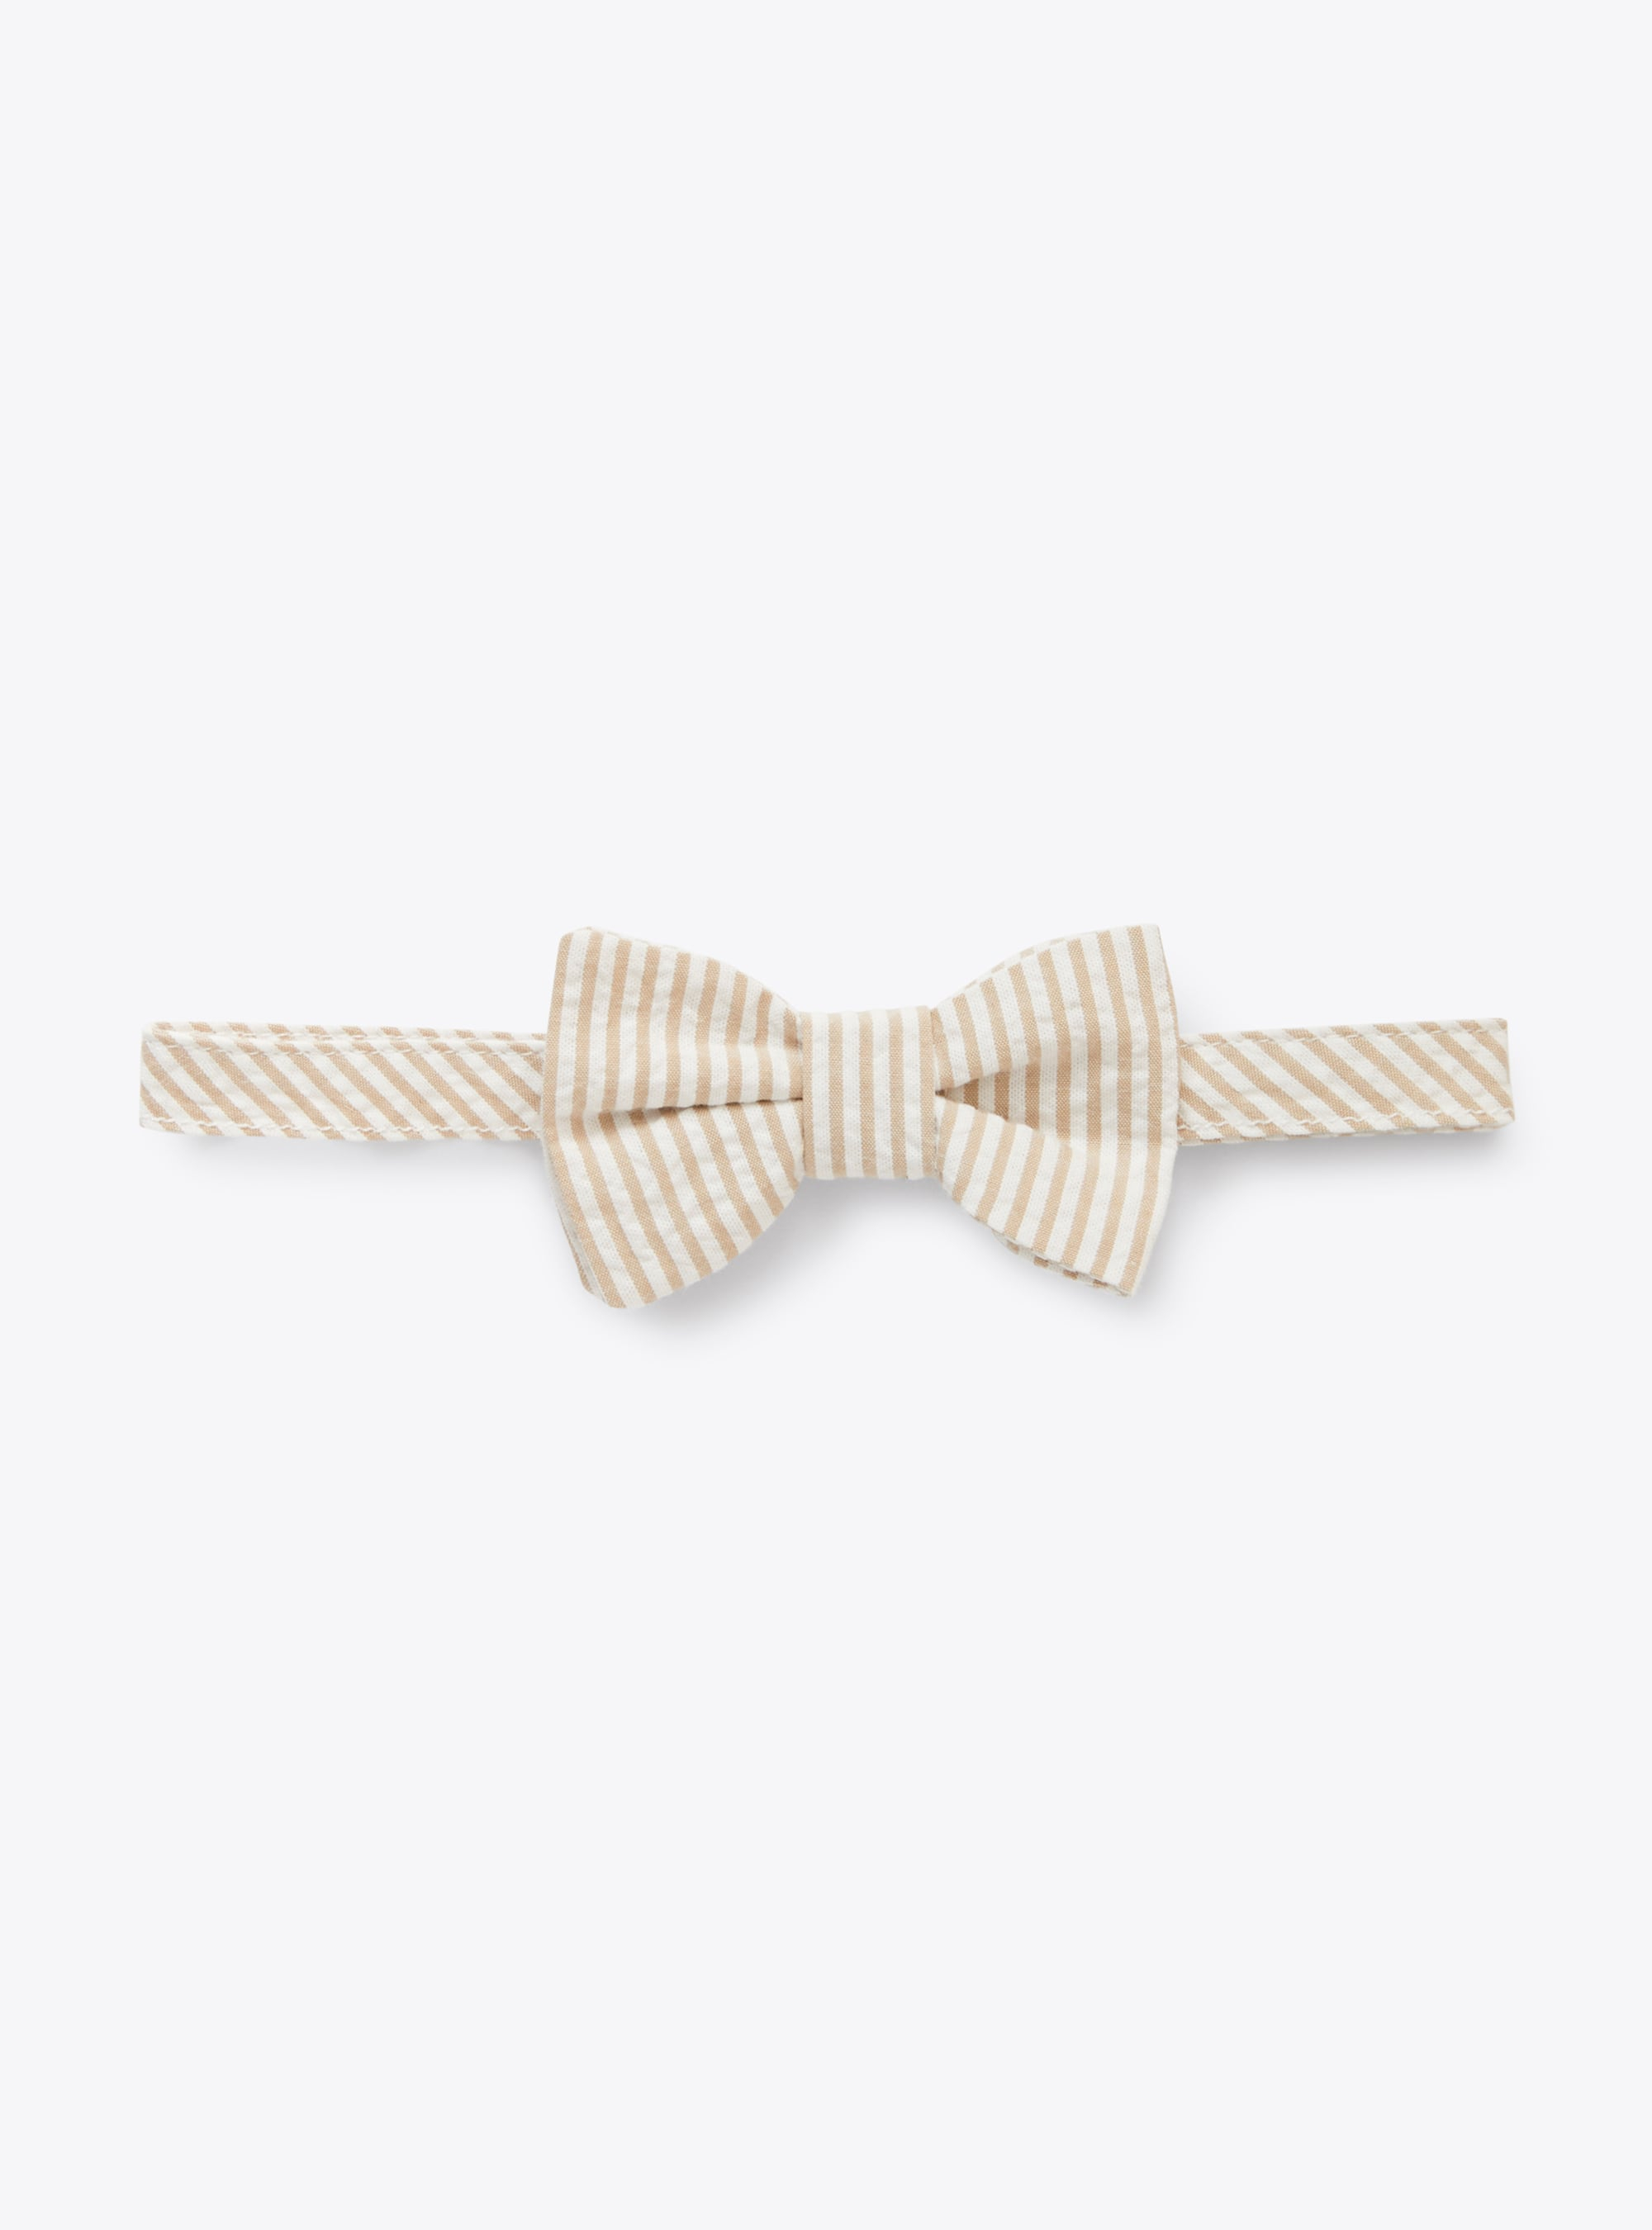 Bow tie in beige-&-white striped seersucker - Beige | Il Gufo